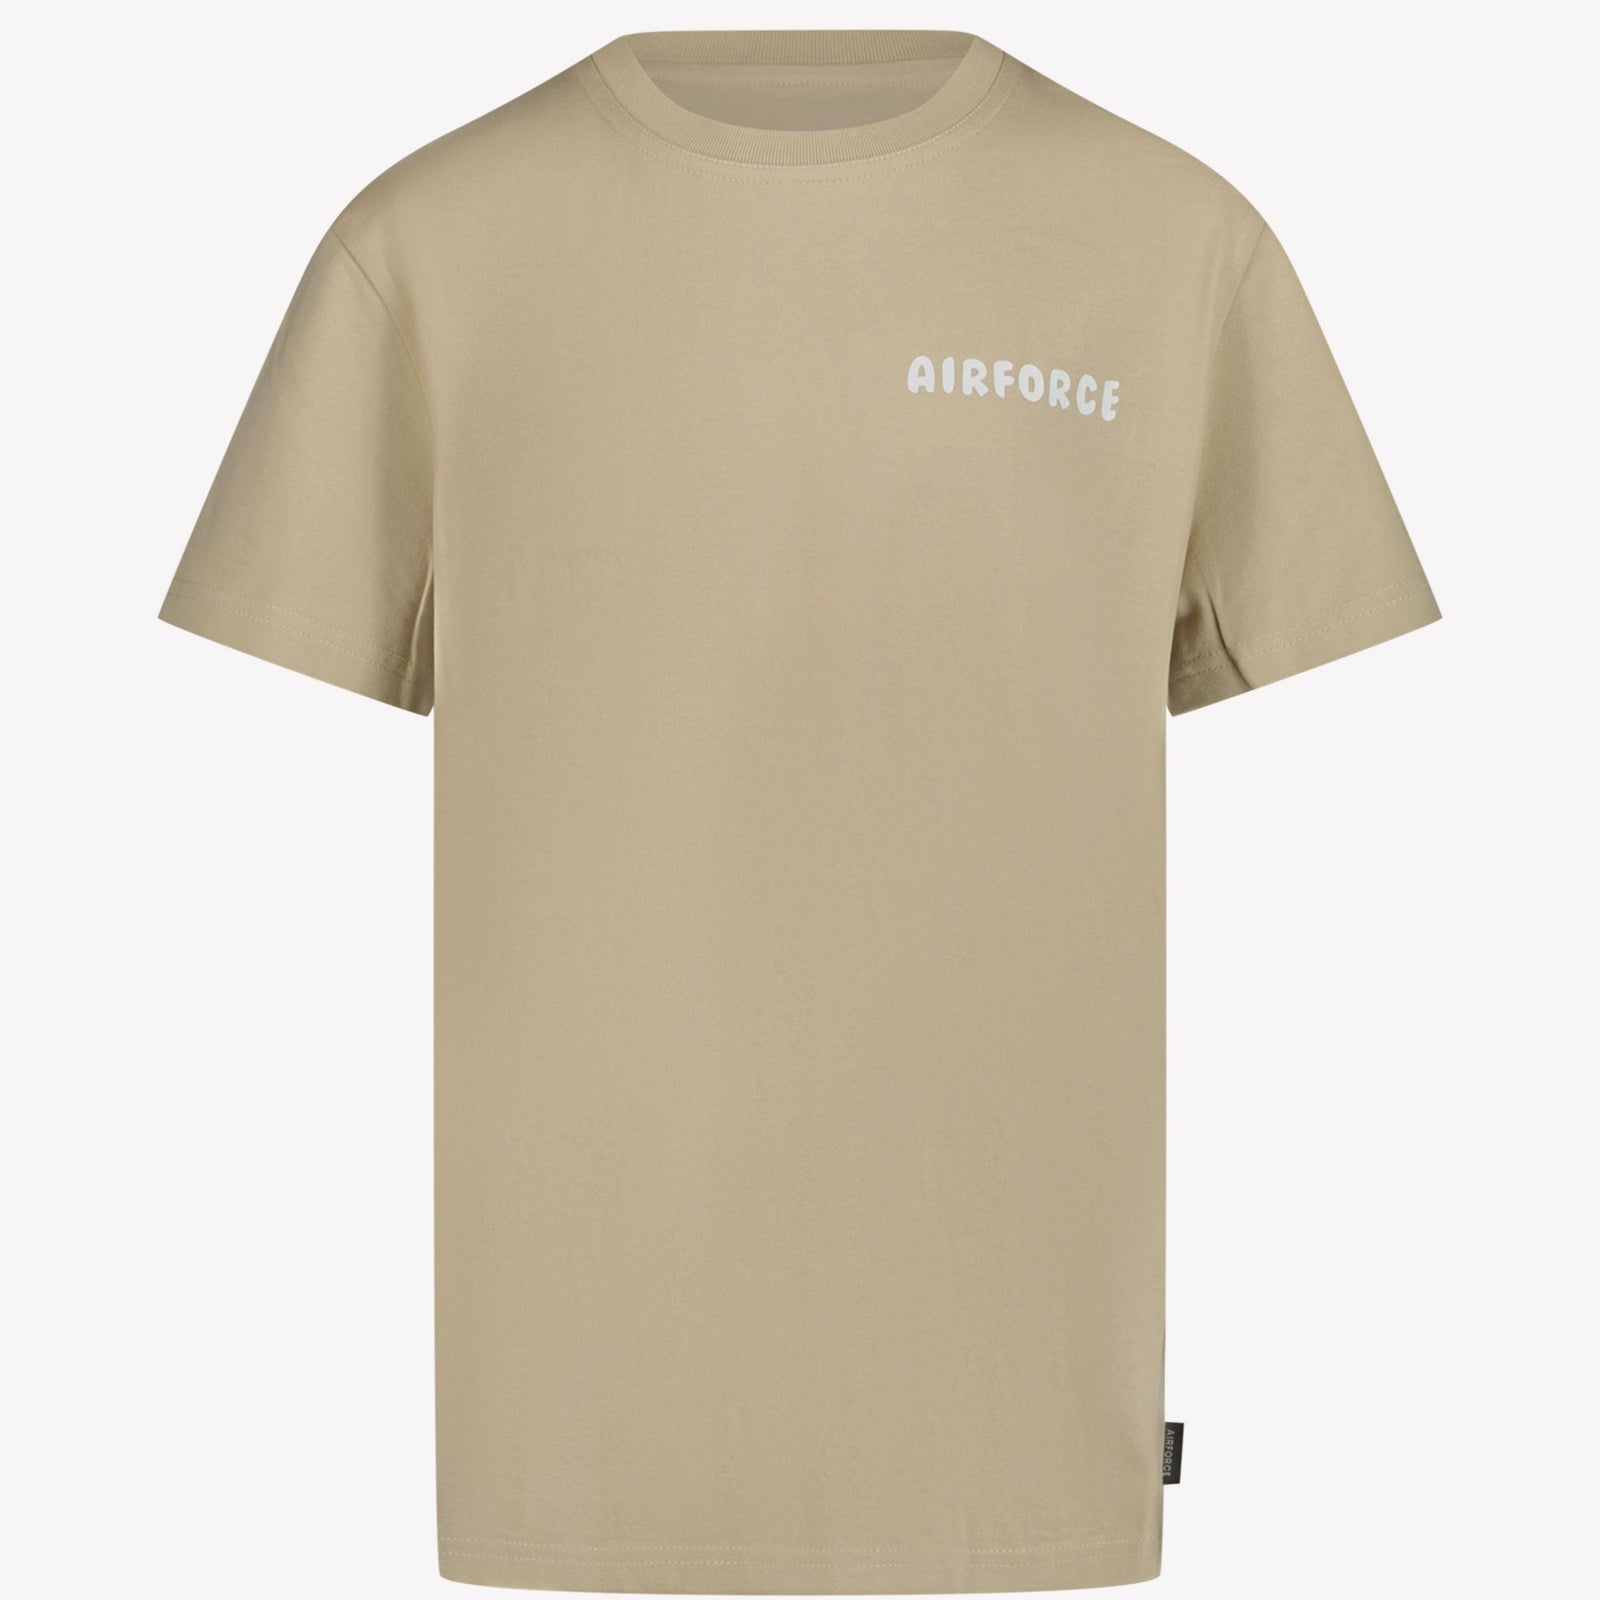 Airforce Kinder Jongens T-Shirt Zand 4Y